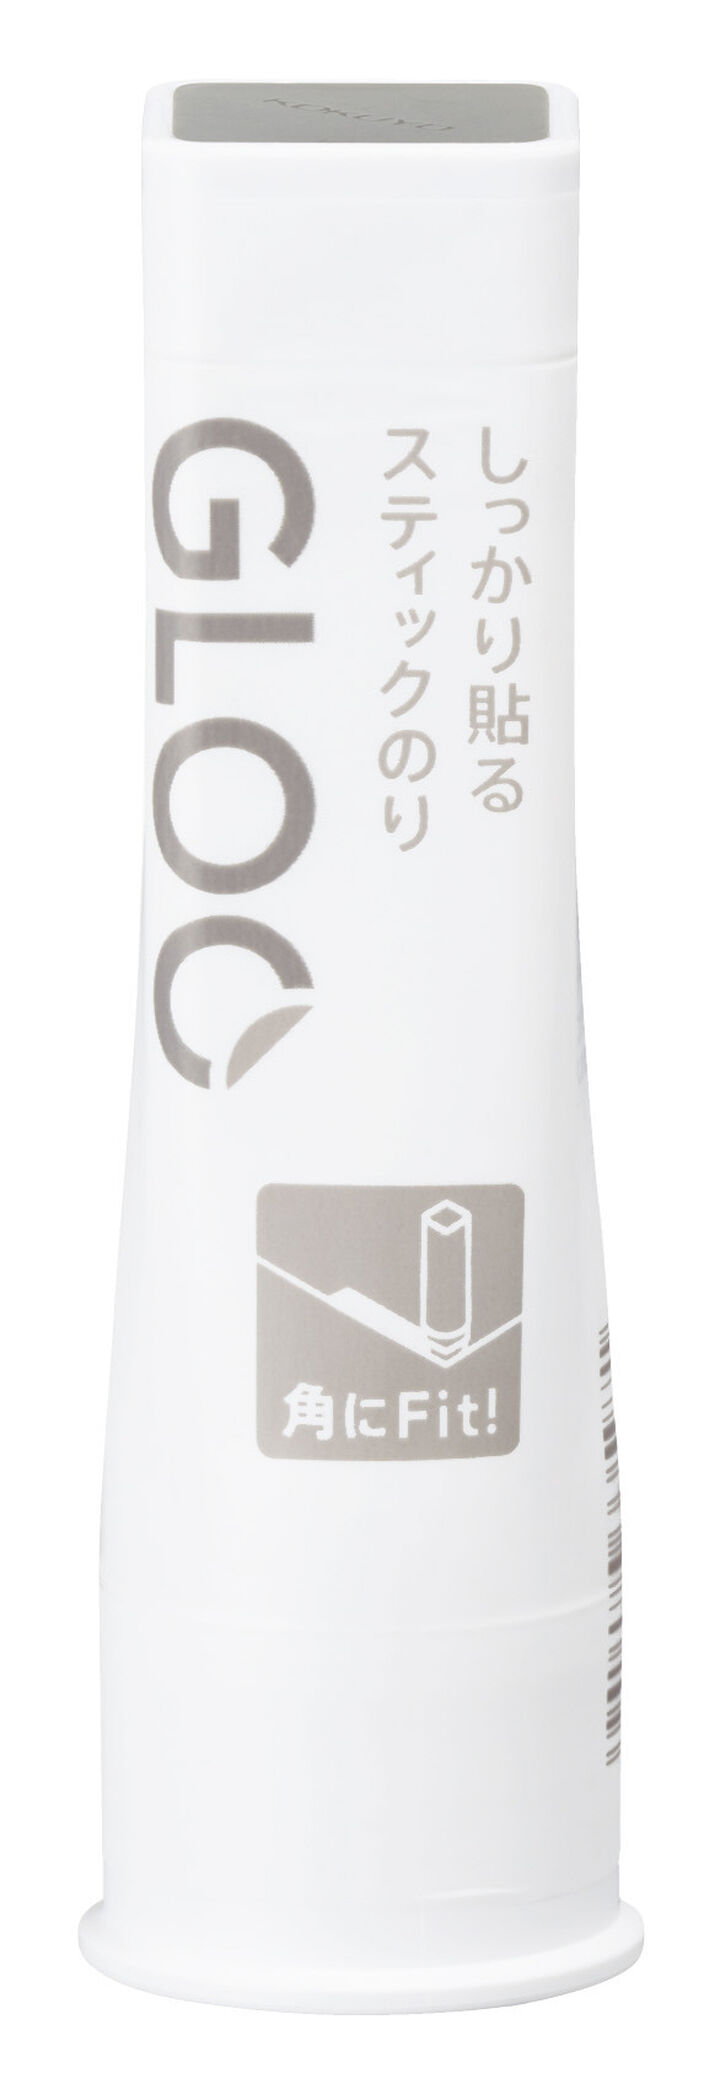 GLOO Stick Glue Strong adhesive 22g Pack of 3,White, medium